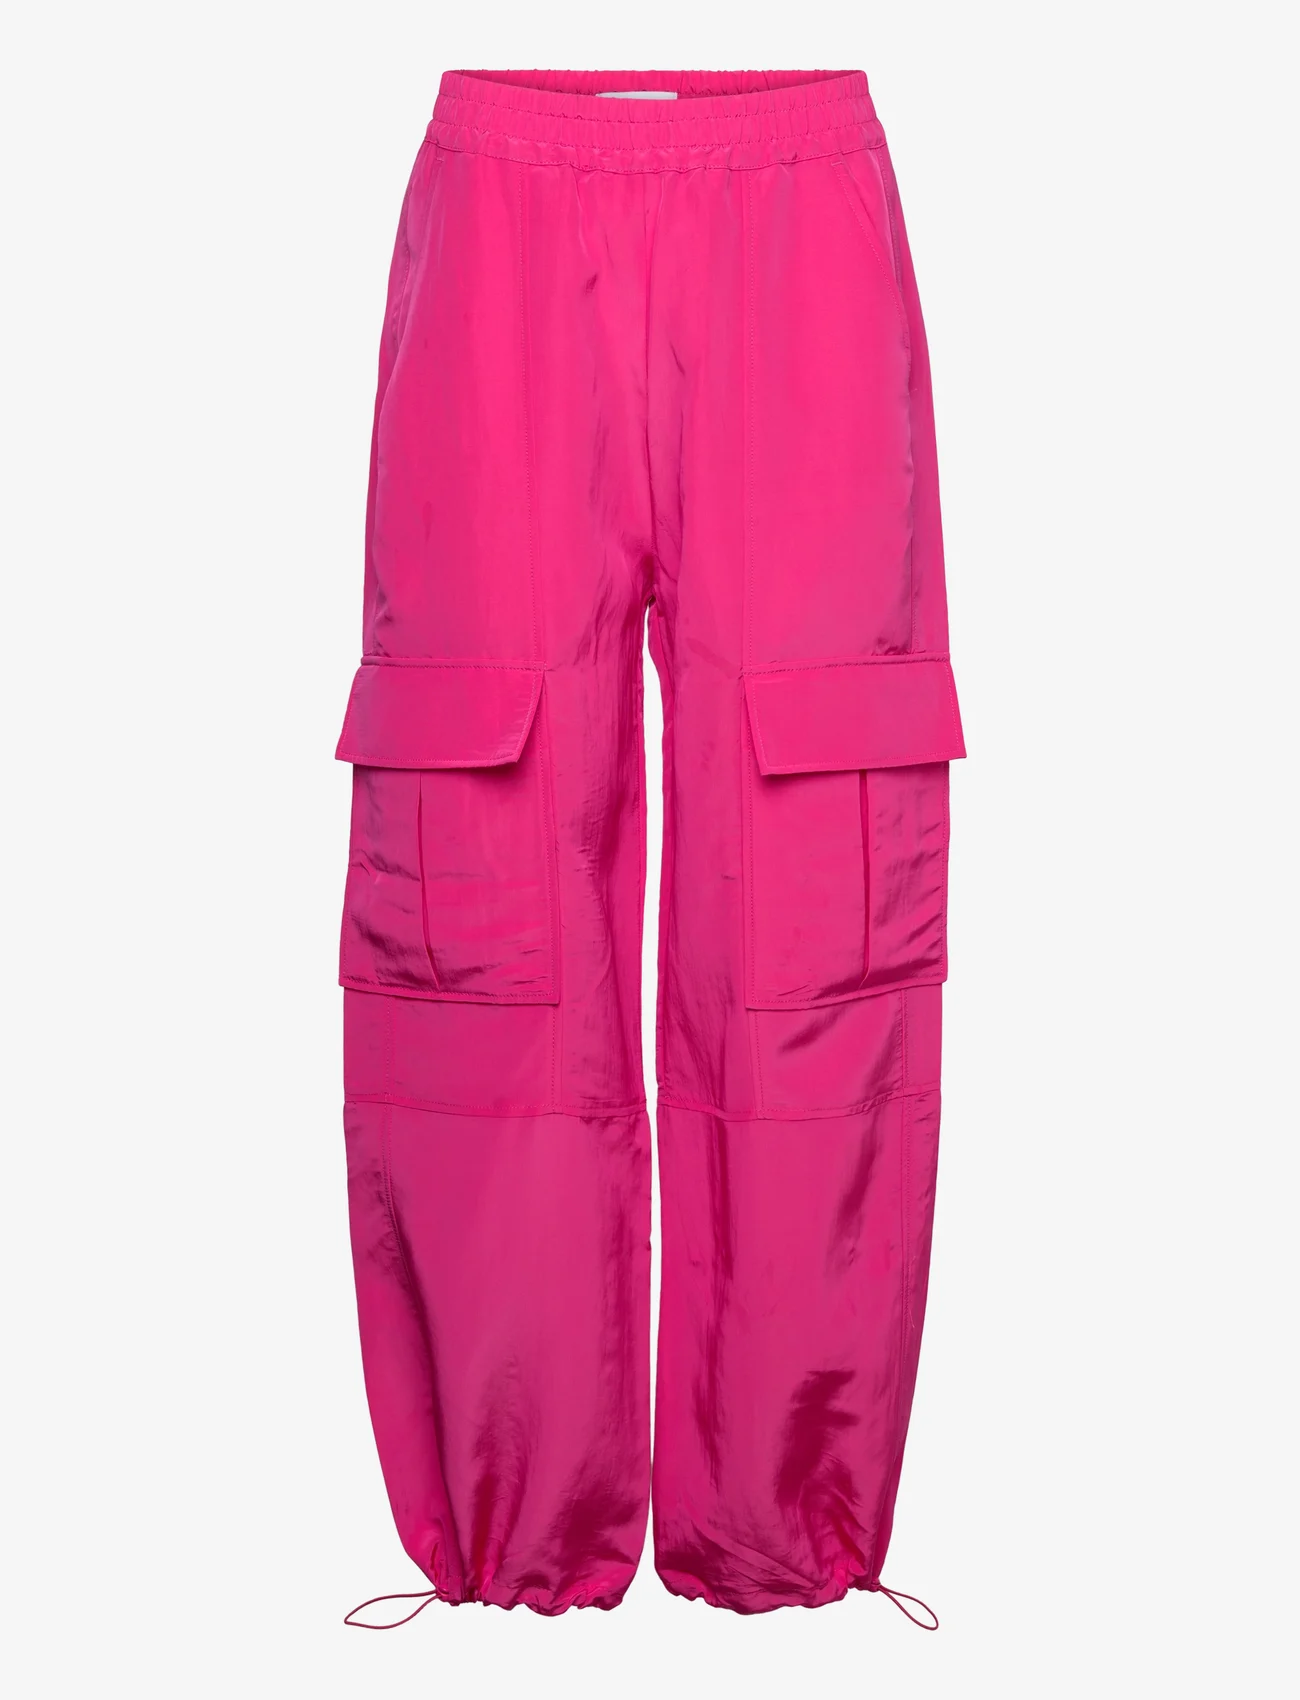 RODEBJER - Rodebjer Hayden - cargo pants - hot pink - 0